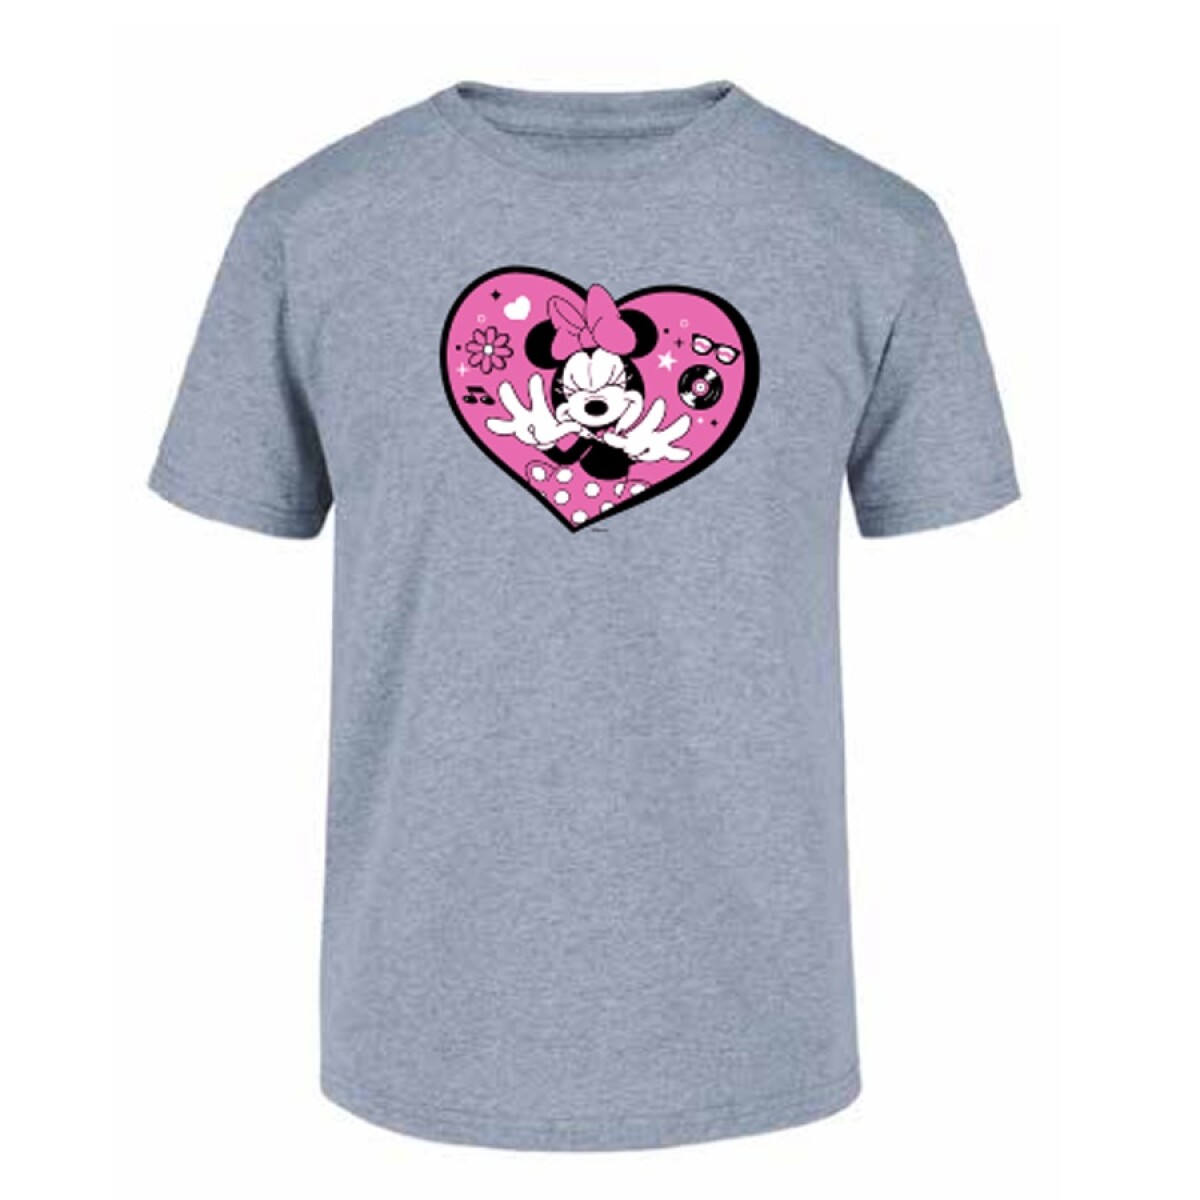 Camiseta Remera Infantil Disney Minnie - GRIS-CLARO 